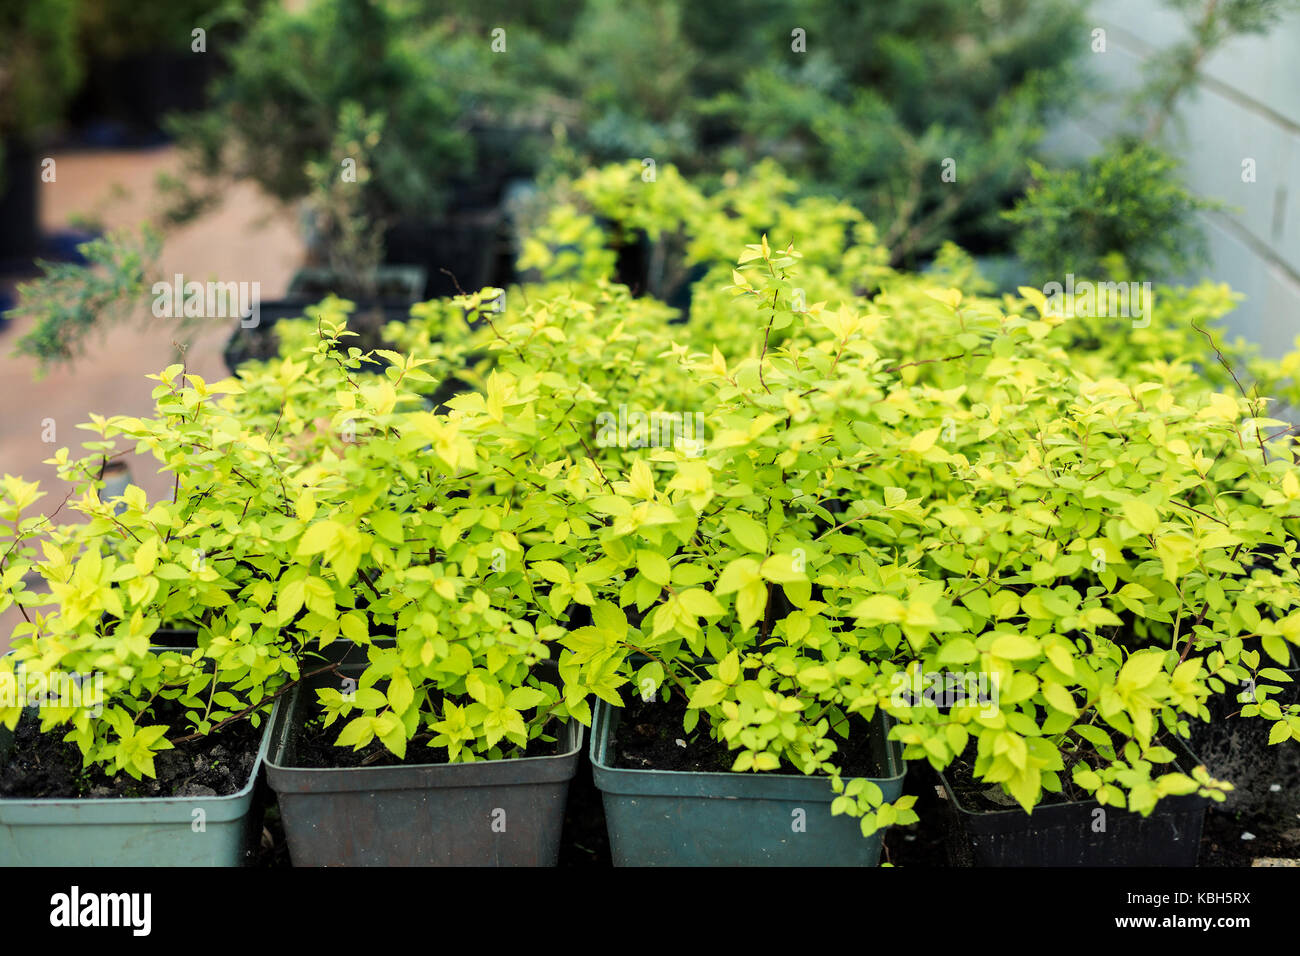 Spirea plants in pots on sale in greenhouse. Stock Photo